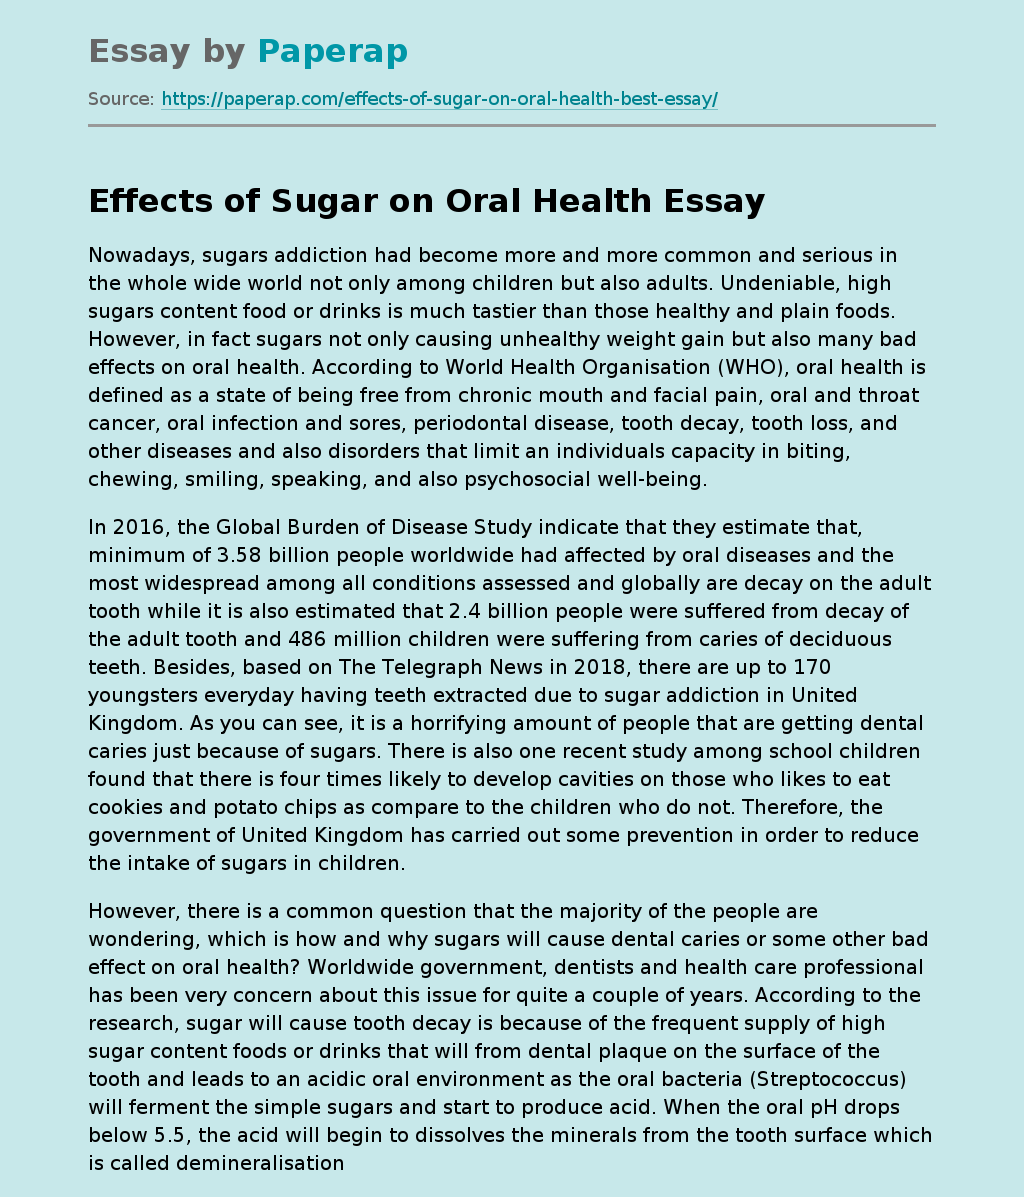 Effects of Sugar on Oral Health